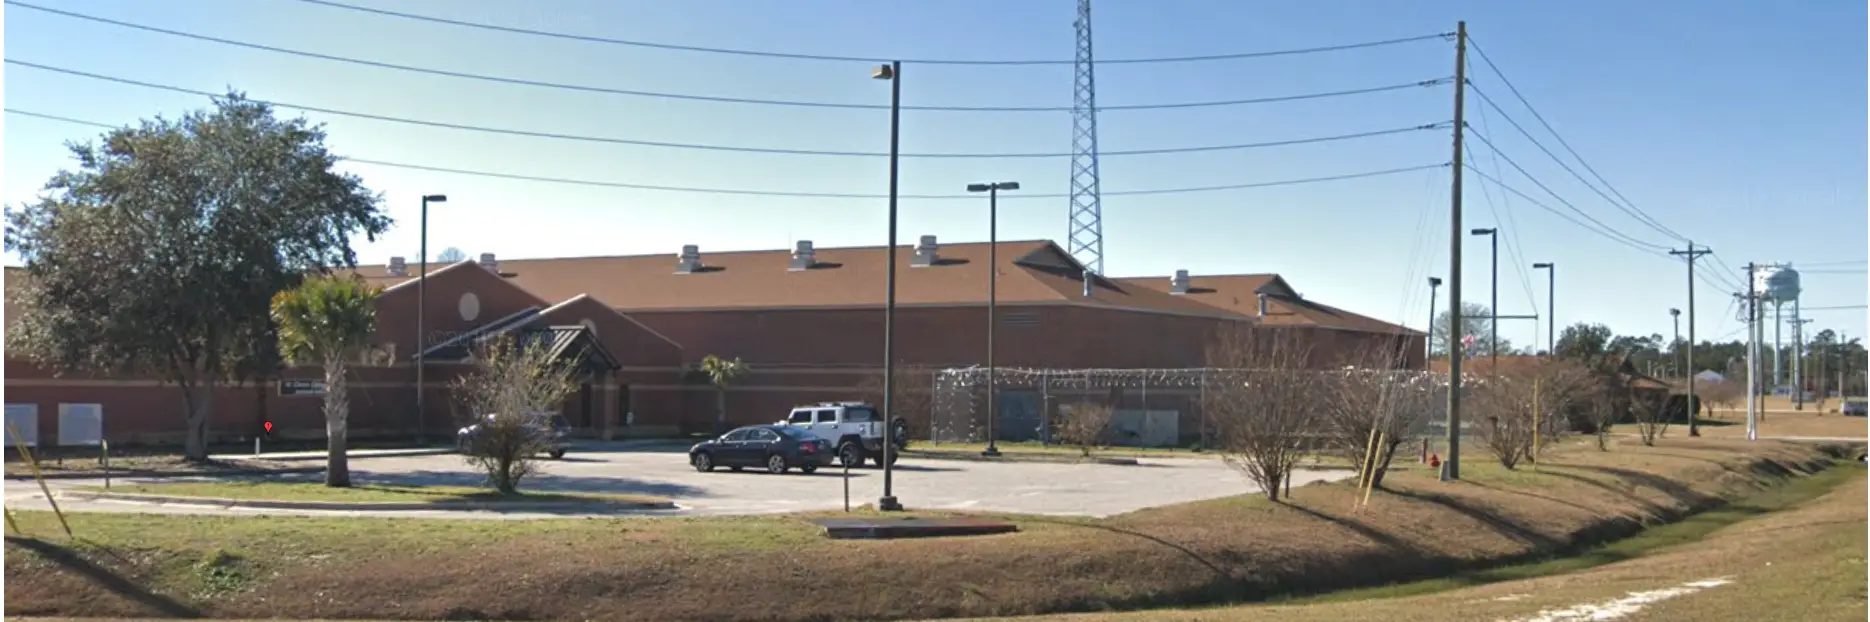 Photos Darlington County Detention Center 2